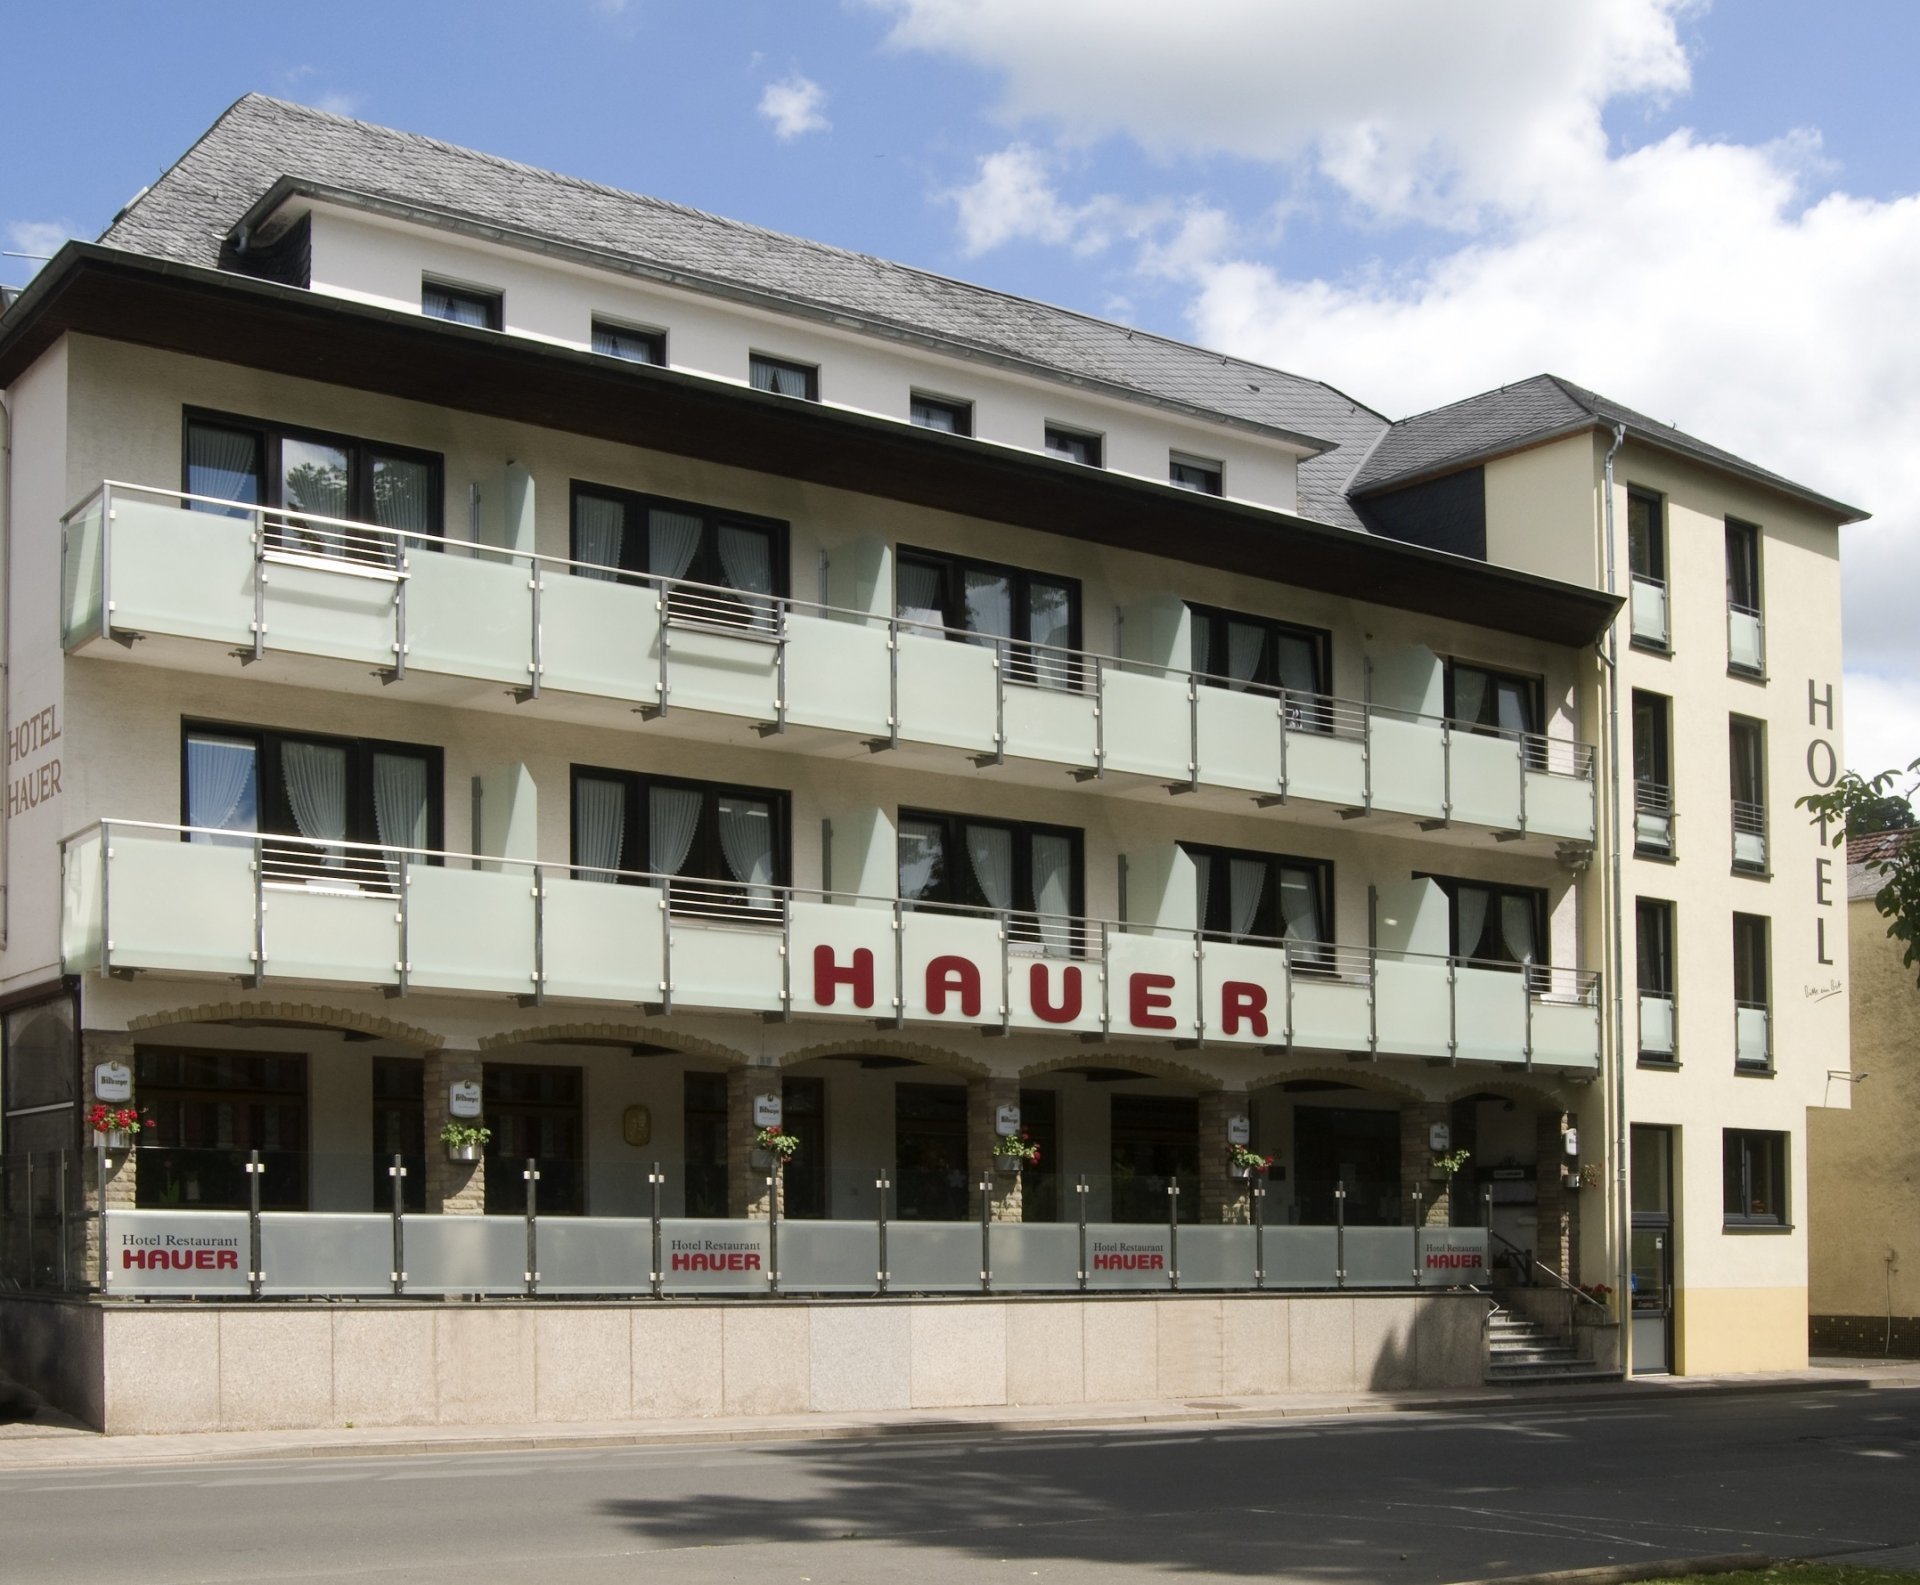 6 Tage Bonbon – Hotel Hauer (3 Sterne) in Bollendorf, Rheinland-Pfalz inkl. Frühstück